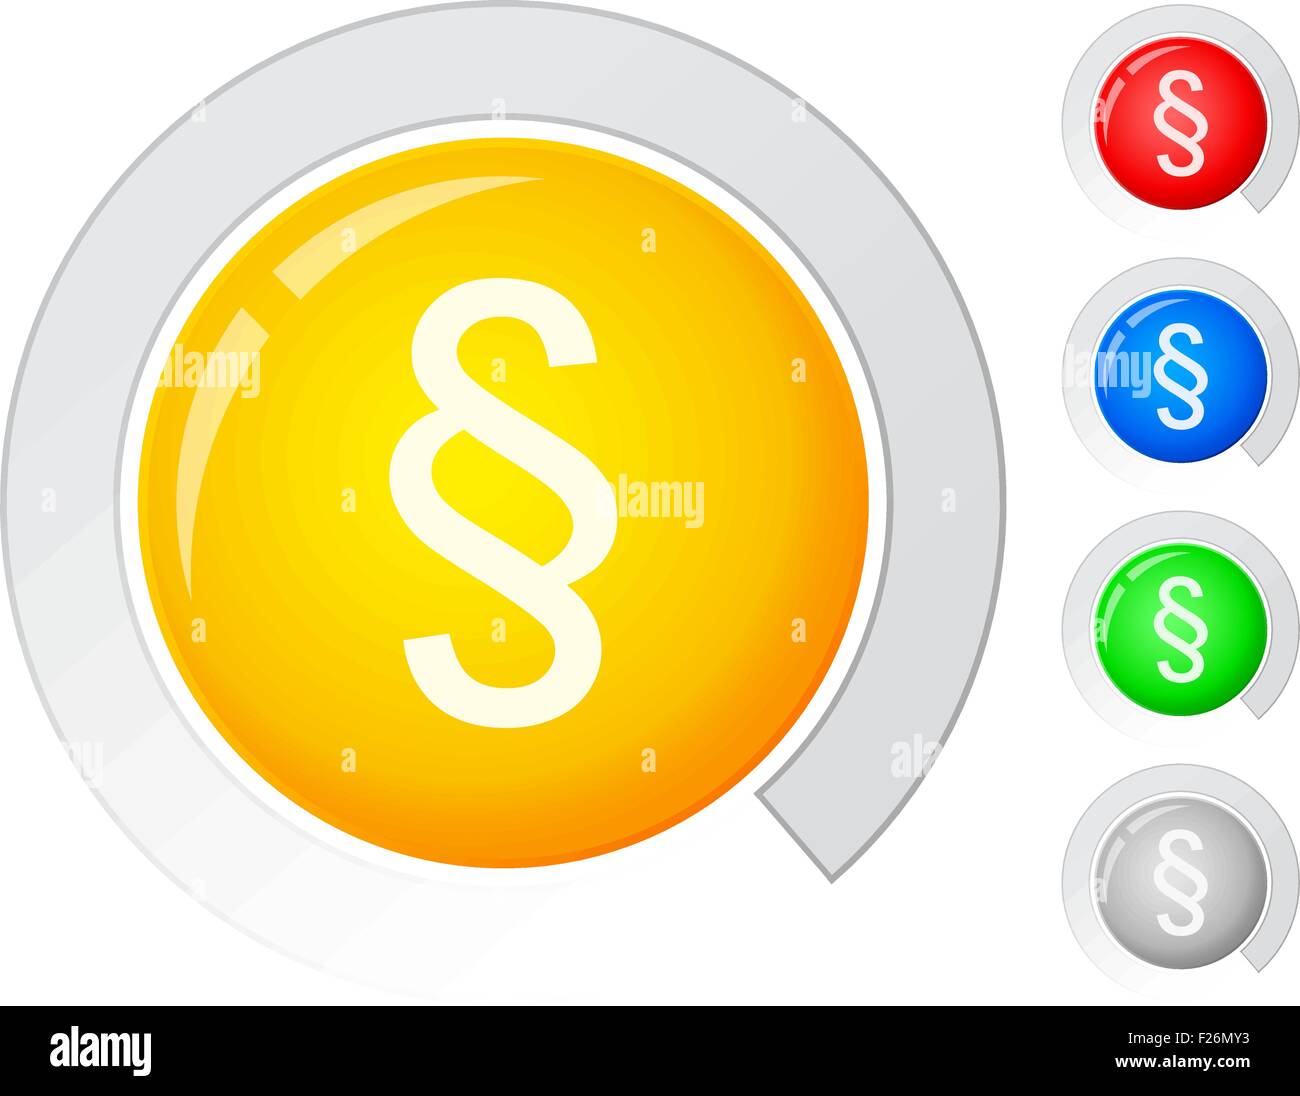 Kreis-Buttons mit Absatzsymbol. Vektor-Illustration. Stock Vektor